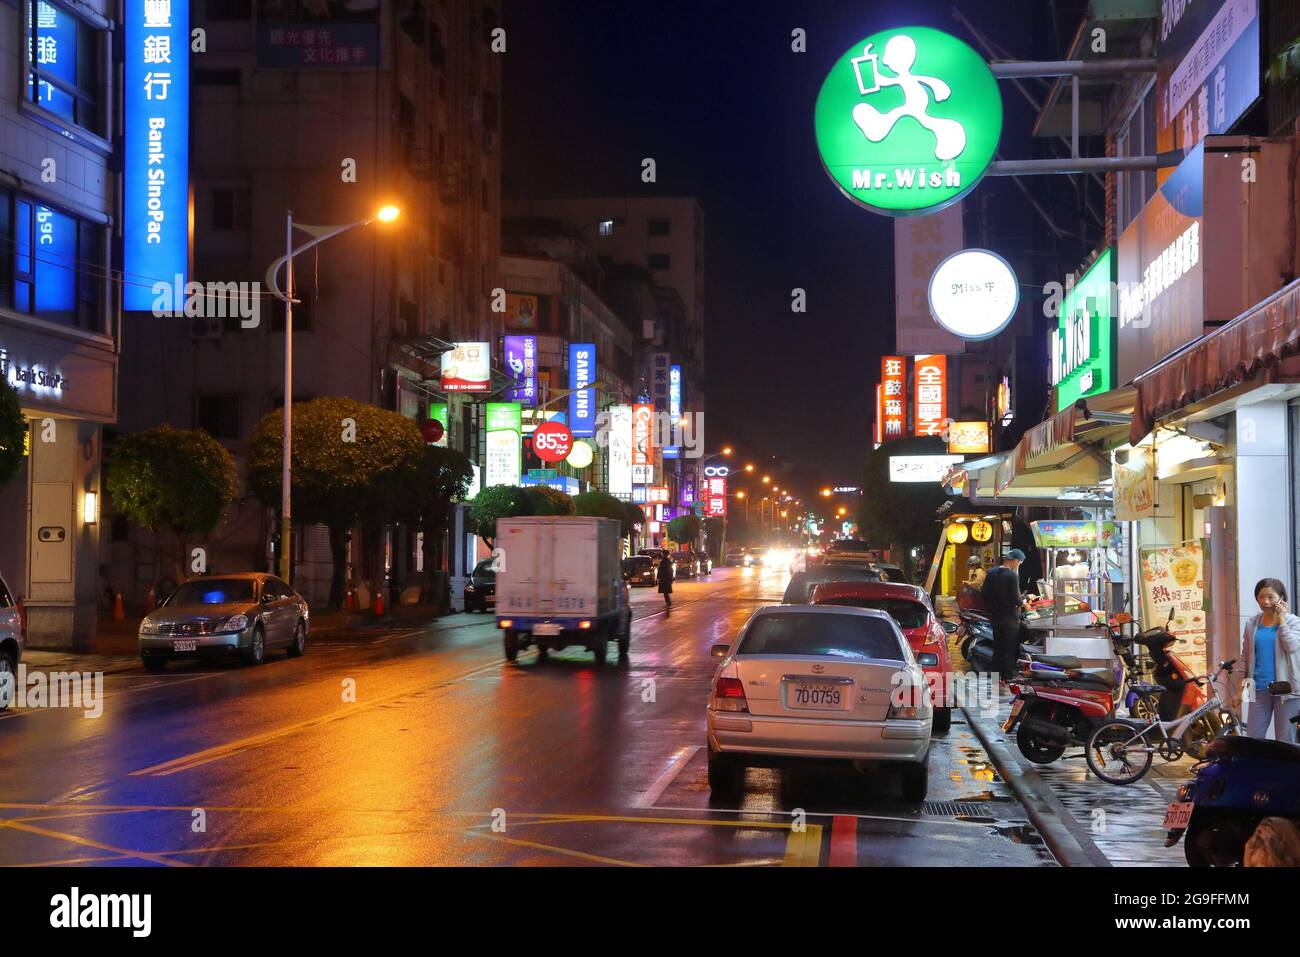 HUALIEN, TAÏWAN - 24 NOVEMBRE 2018 : vue nocturne de la ville de Hualien, Taïwan. Hualien est l'une des plus grandes villes de la côte est de Taïwan. Banque D'Images